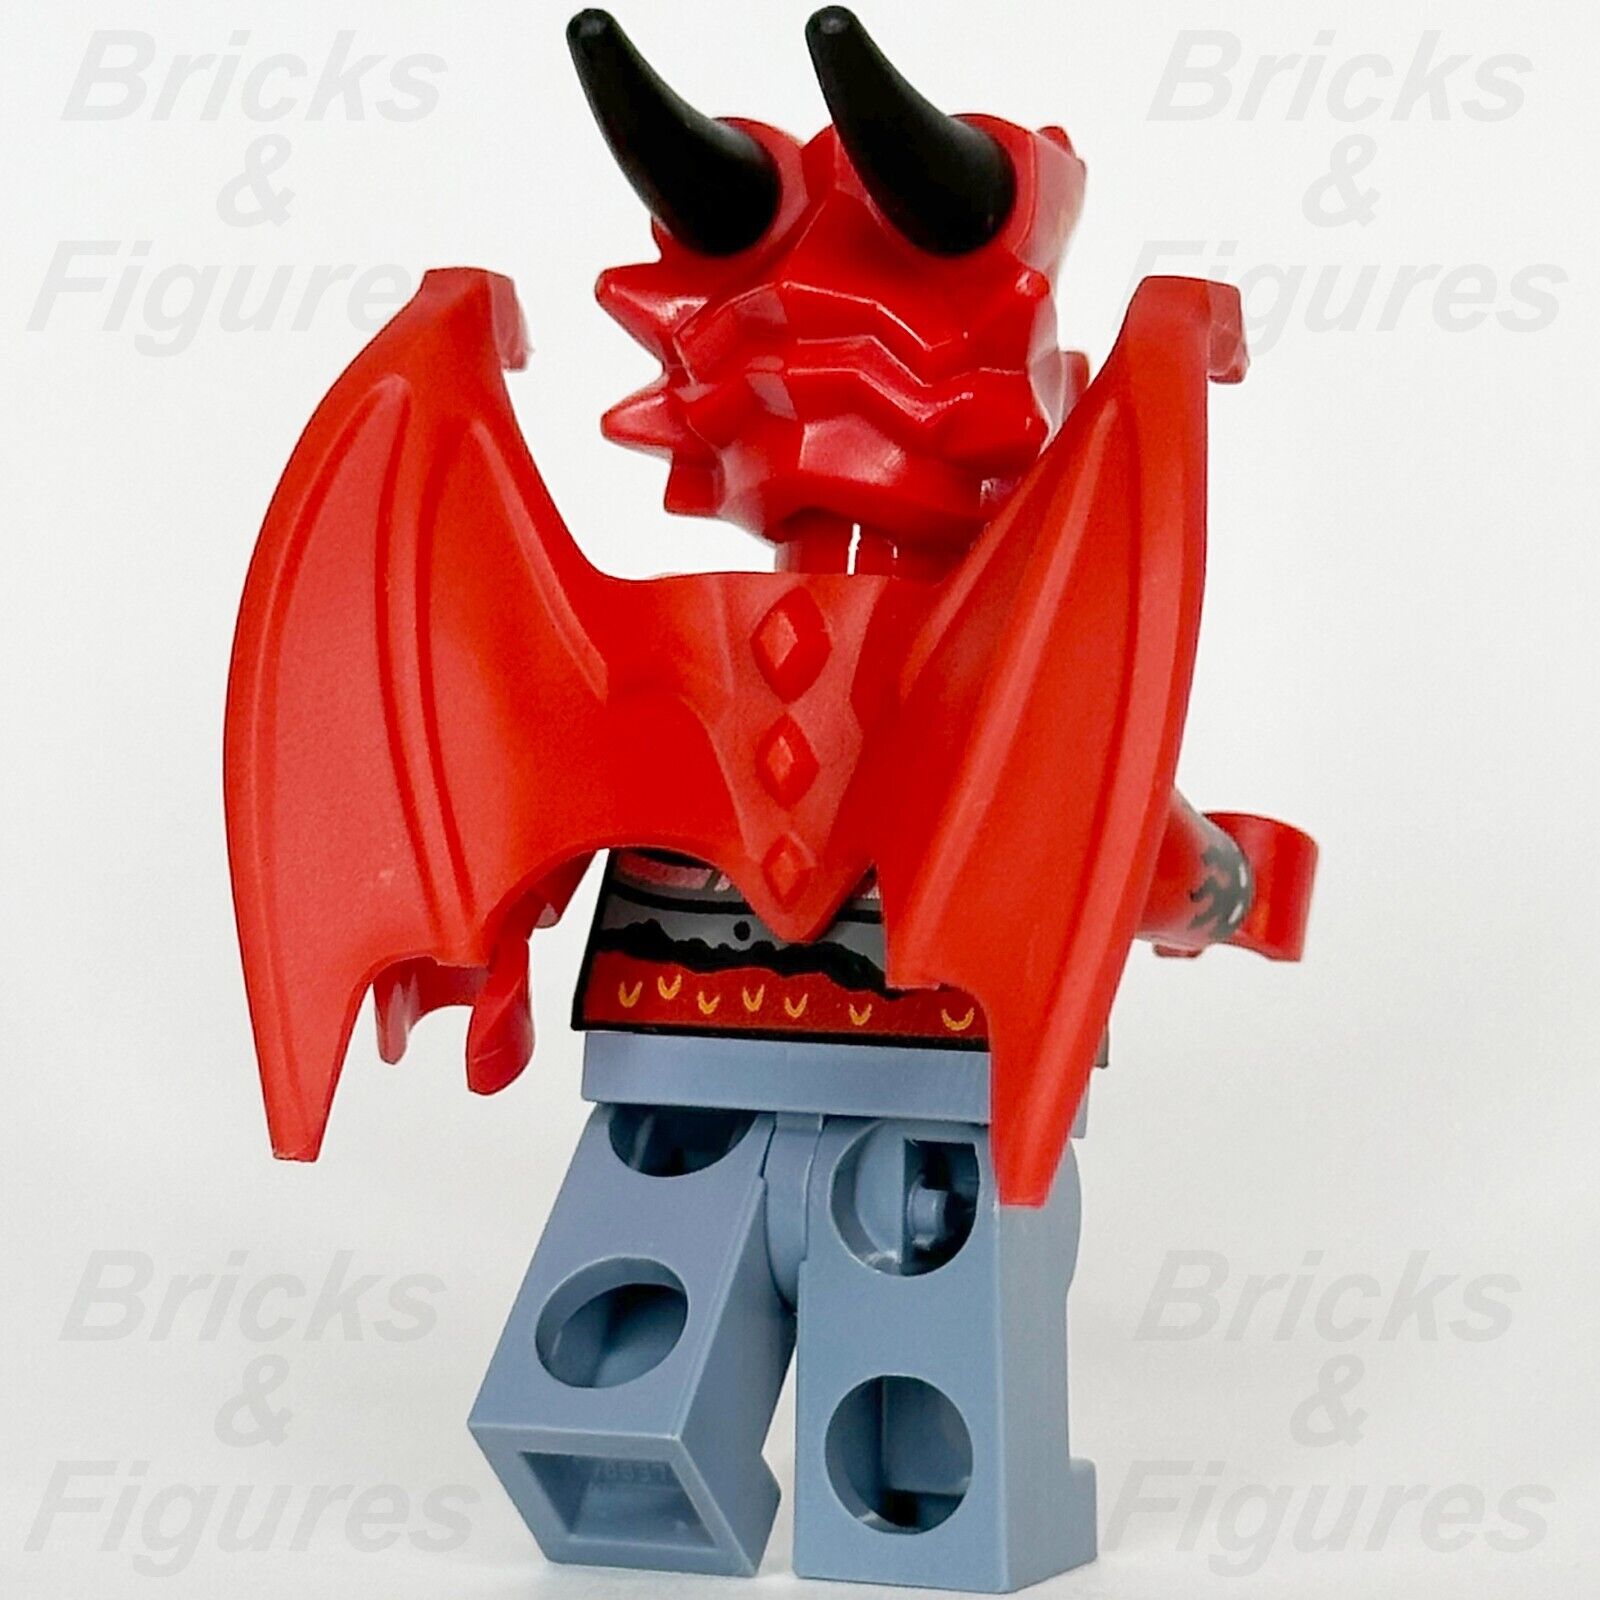 LEGO Vidiyo Metal Dragon Minifigure BeatBox Red Dragon Minifig 43109 vid019